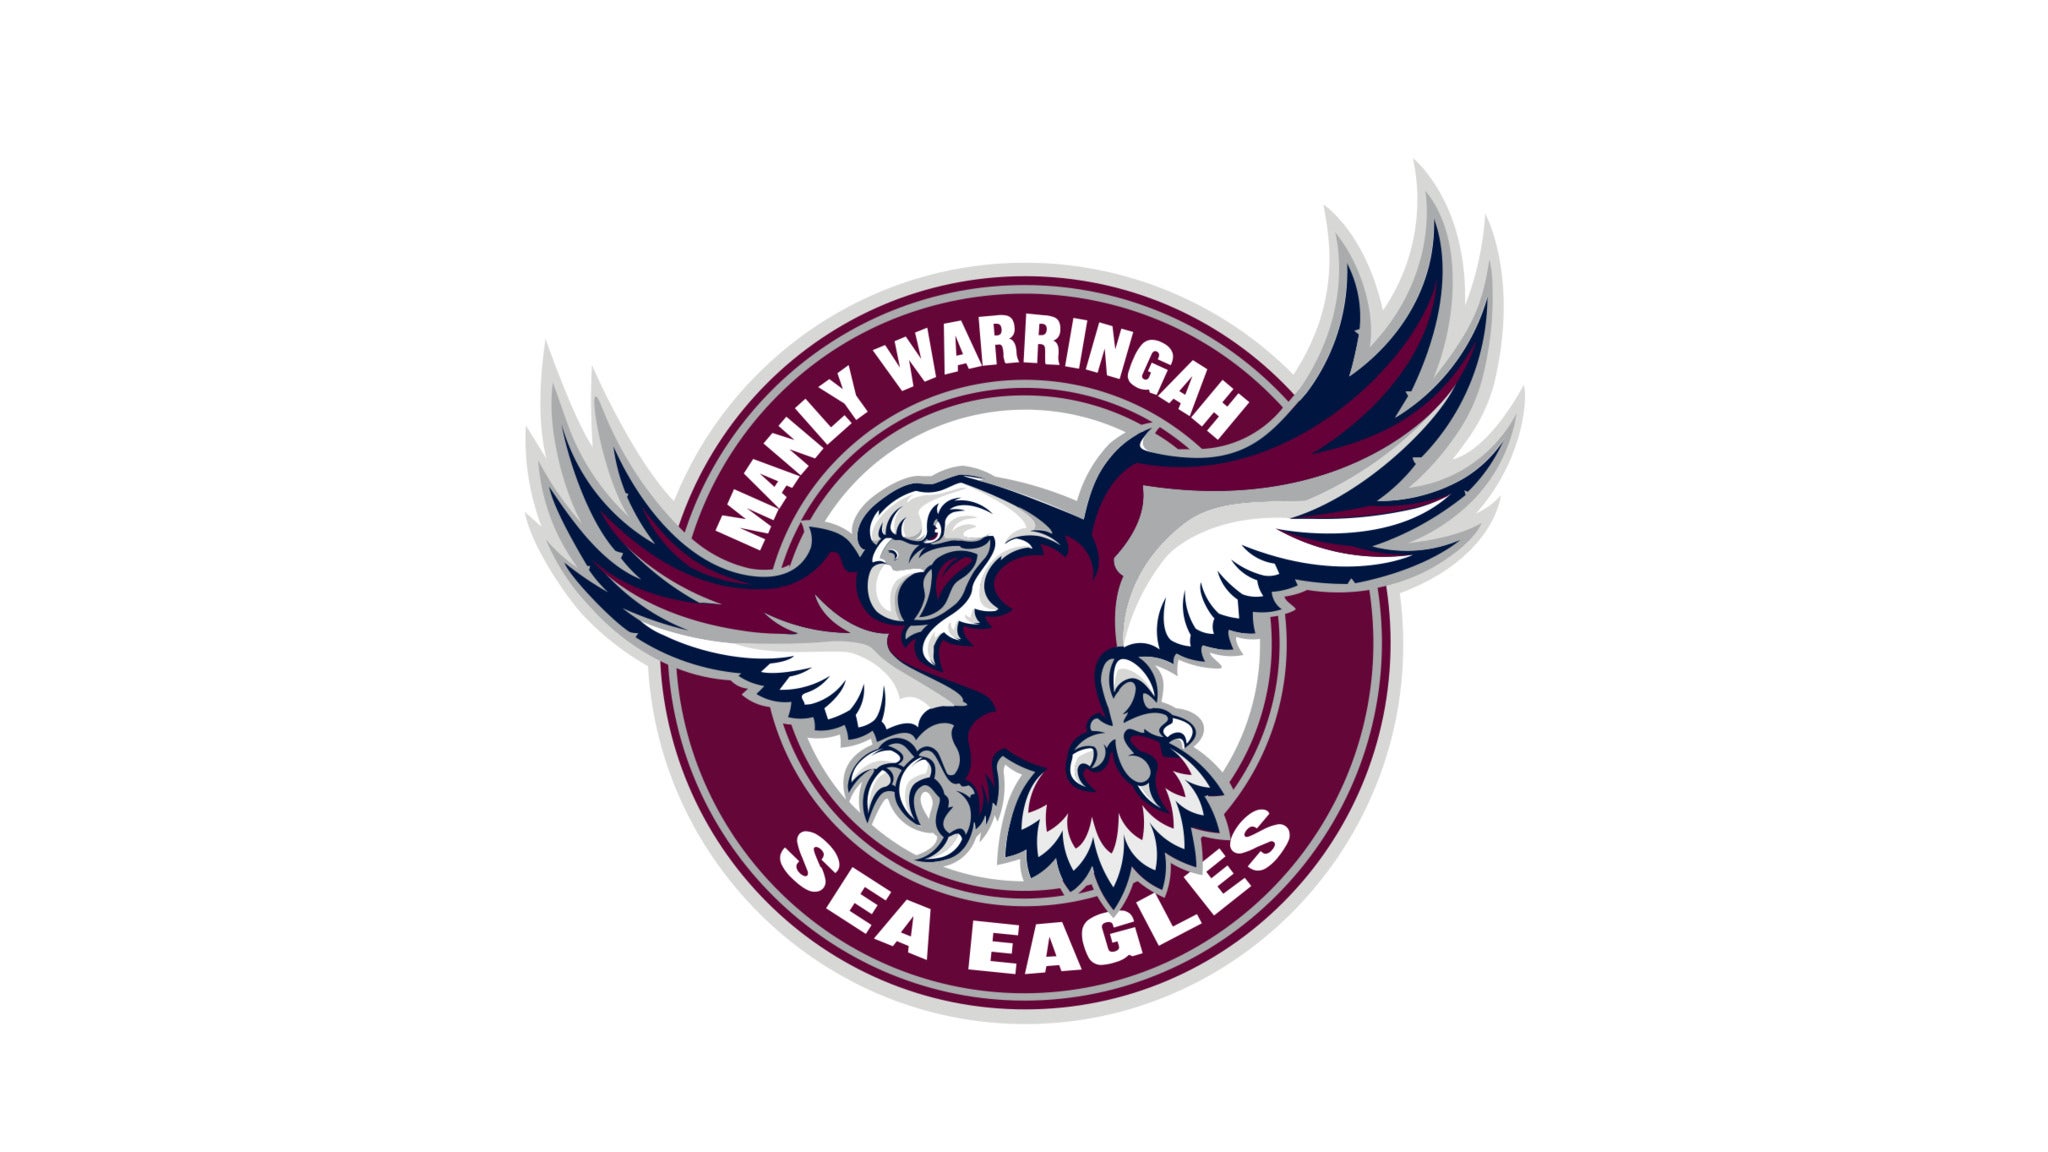 Manly Warringah Sea Eagles v Parramatta Eels in Brookvale promo photo for Members presale offer code